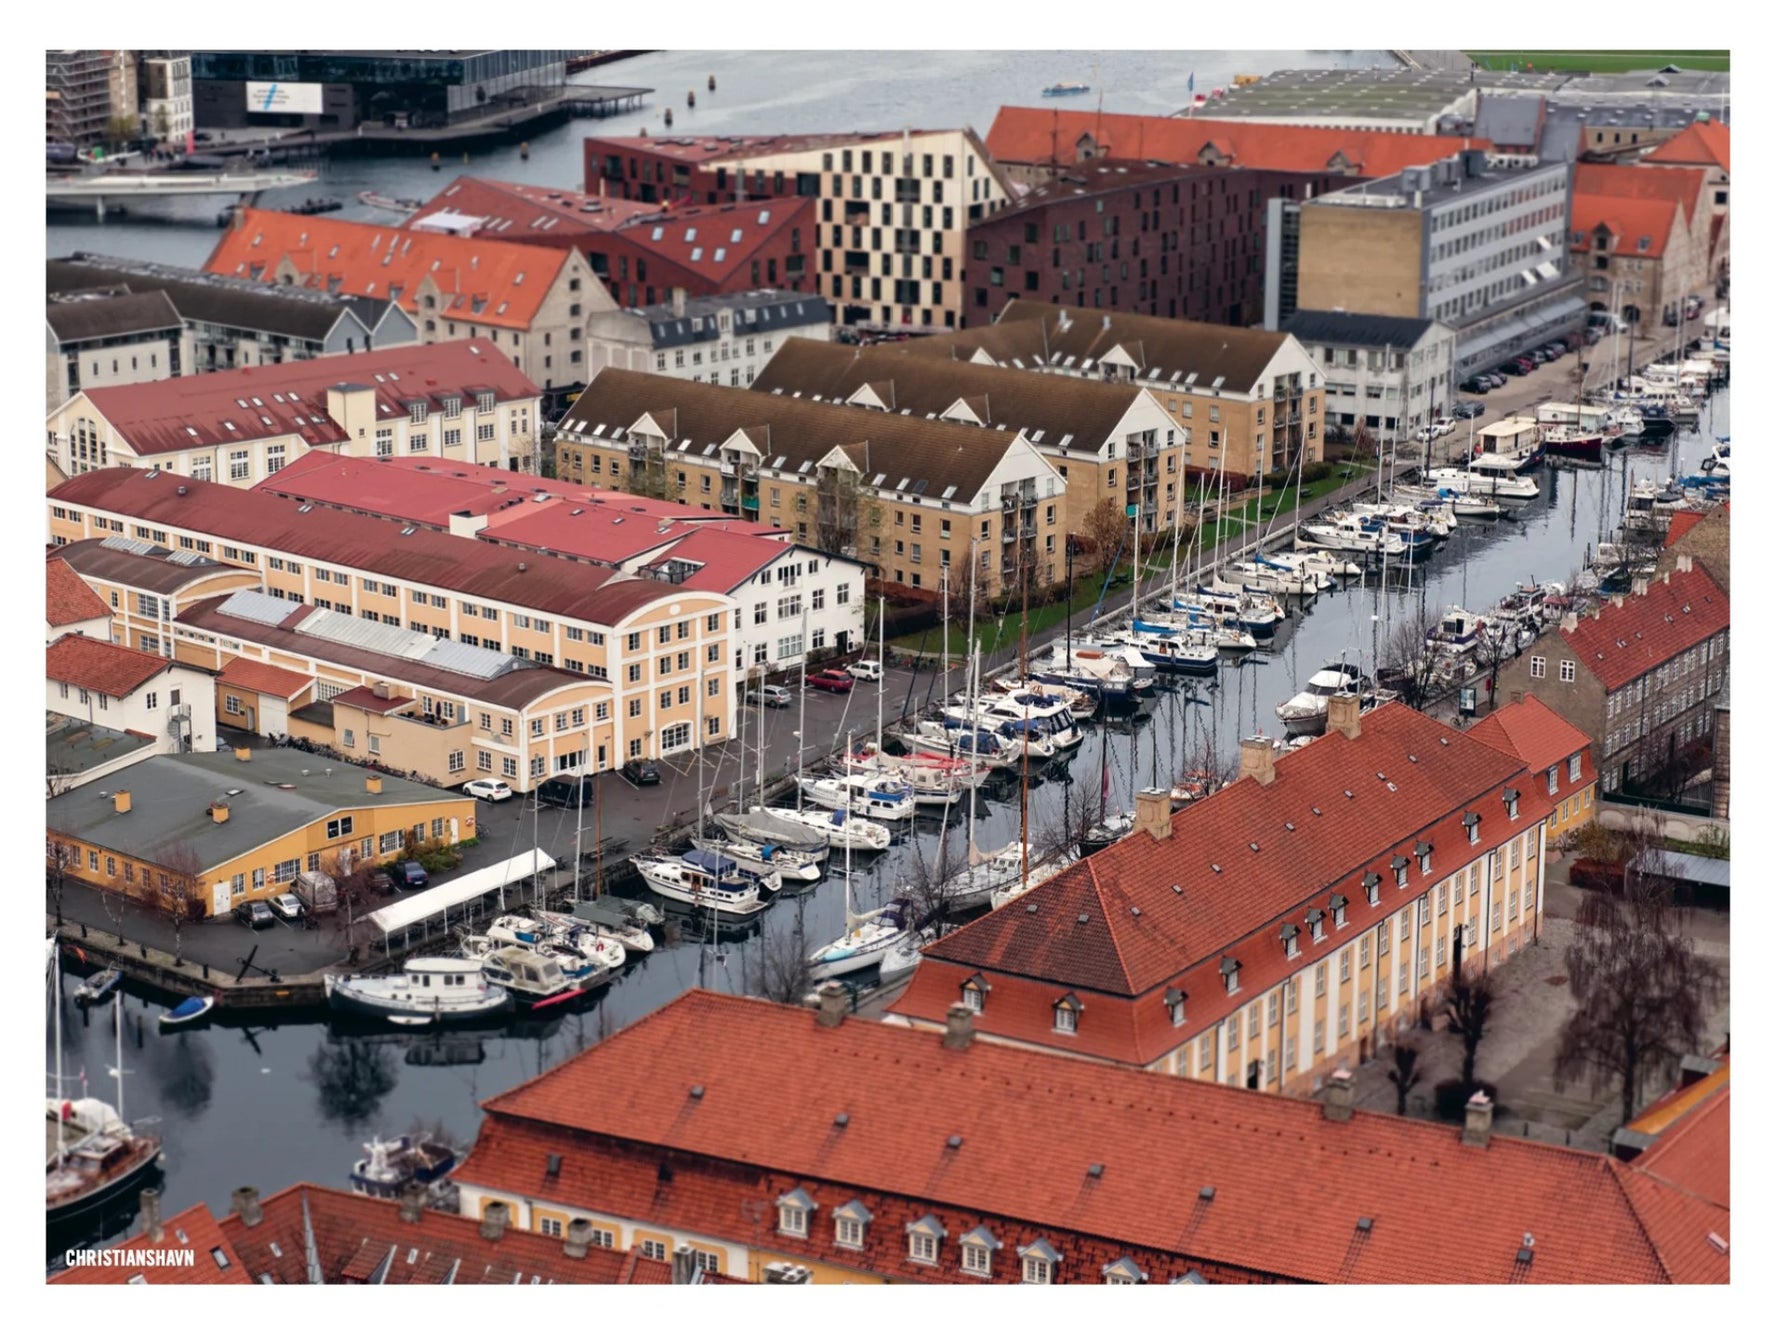 500 ukrytych tajemnic Kopenhagi